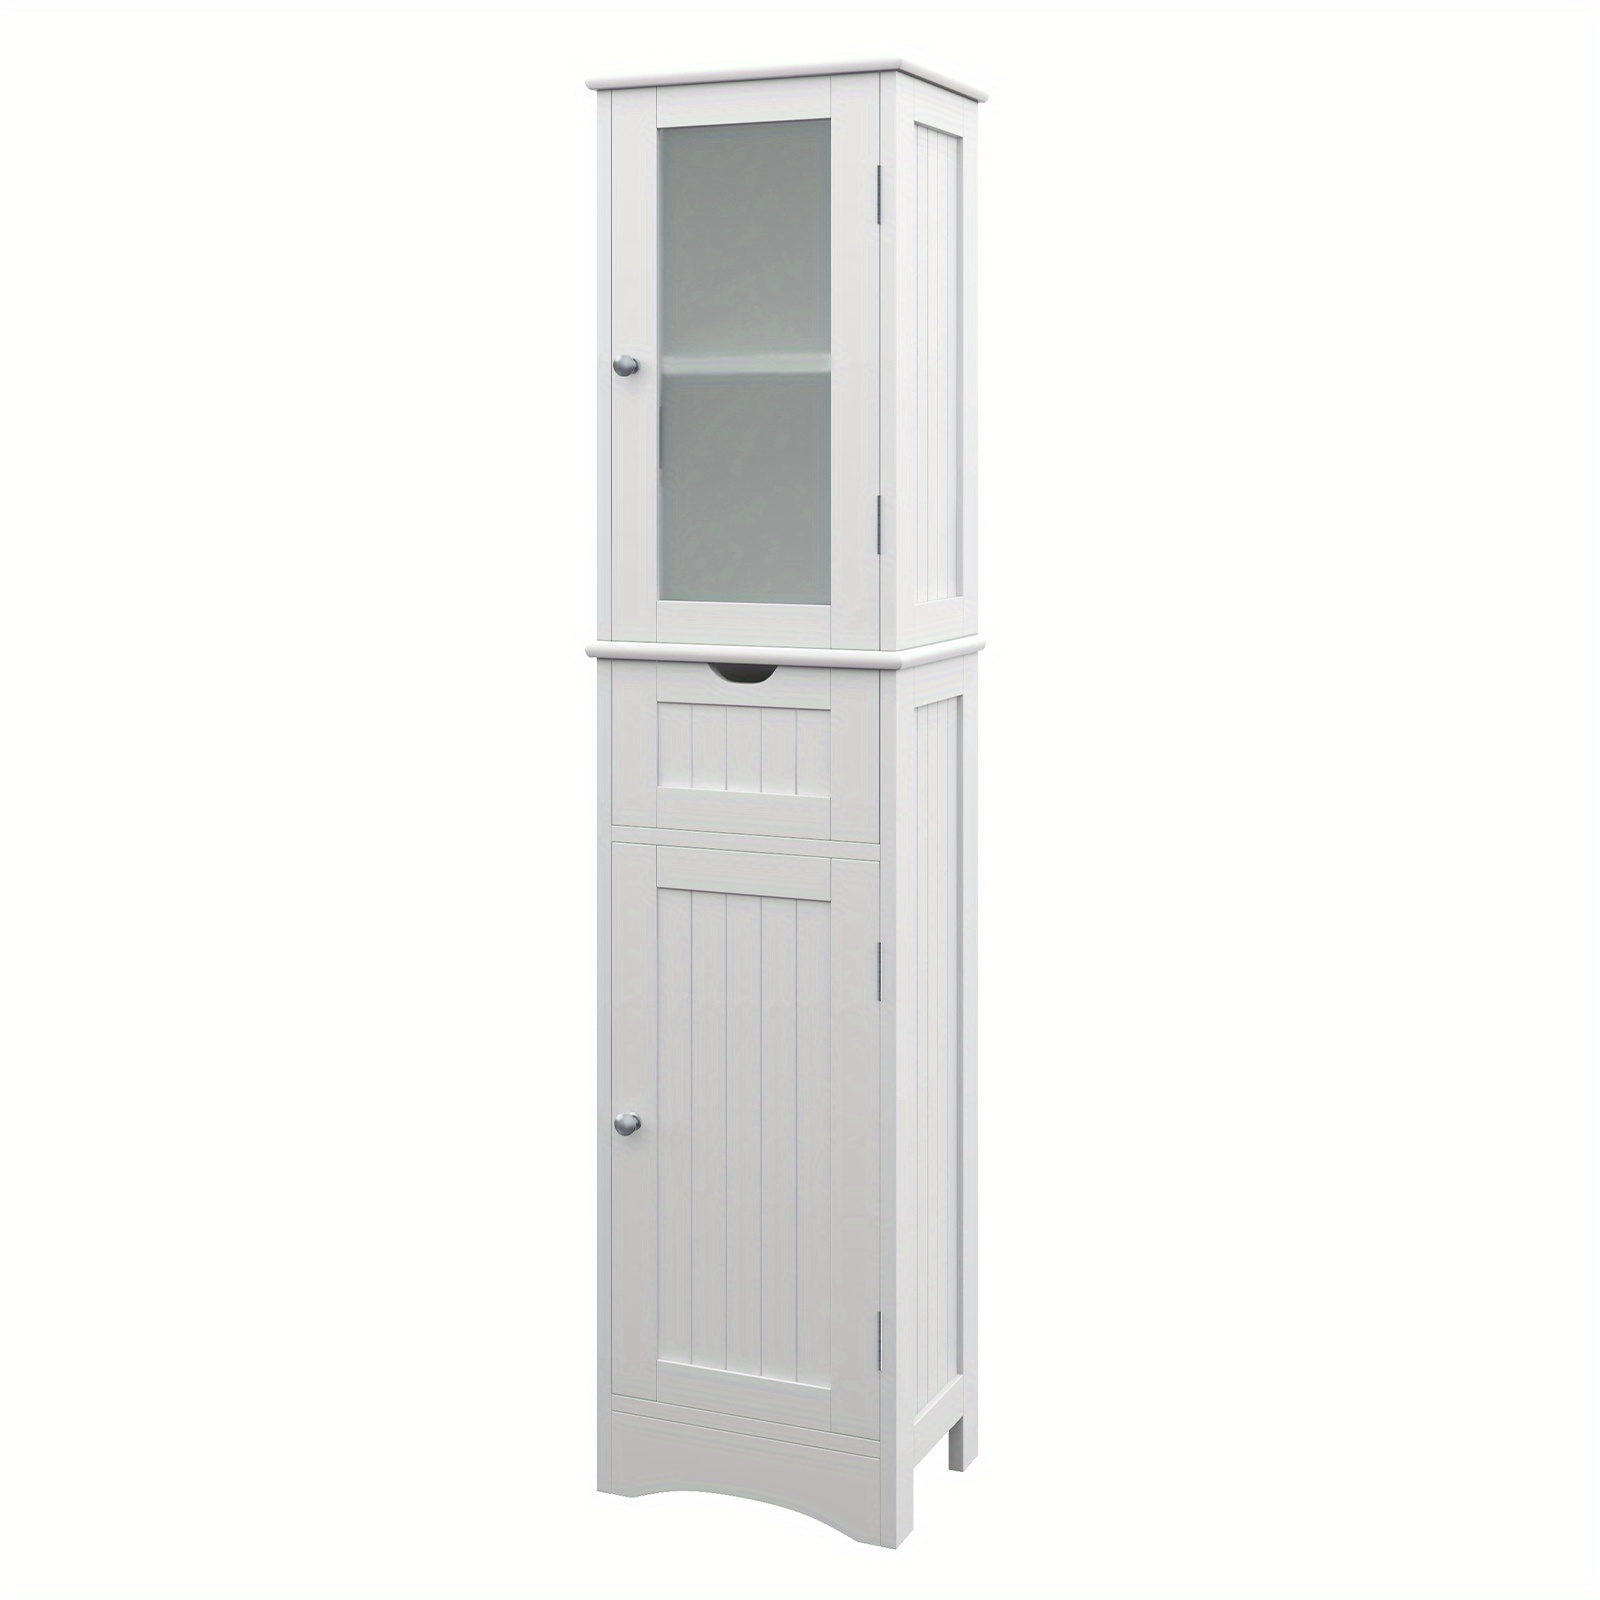 

Costway Bathroom Tall Cabinet Freestanding Linen Tower W/ Doors & Drawer White